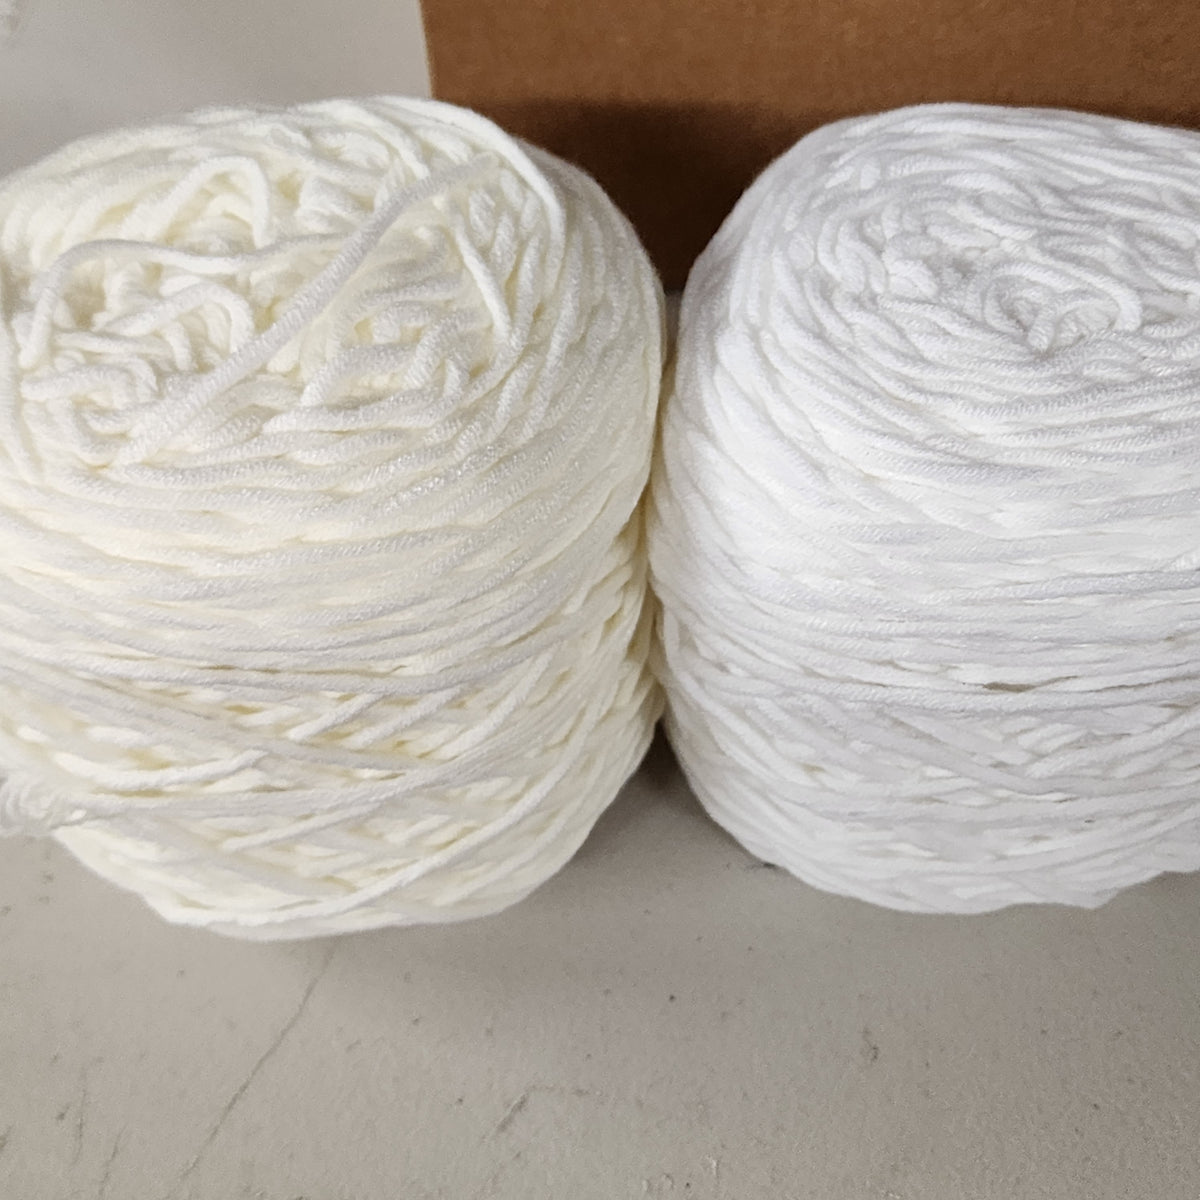 EFFY Chunky Cotton Acrylic Yarn Bundles! Inspiration awaits! - All Things  EFFY